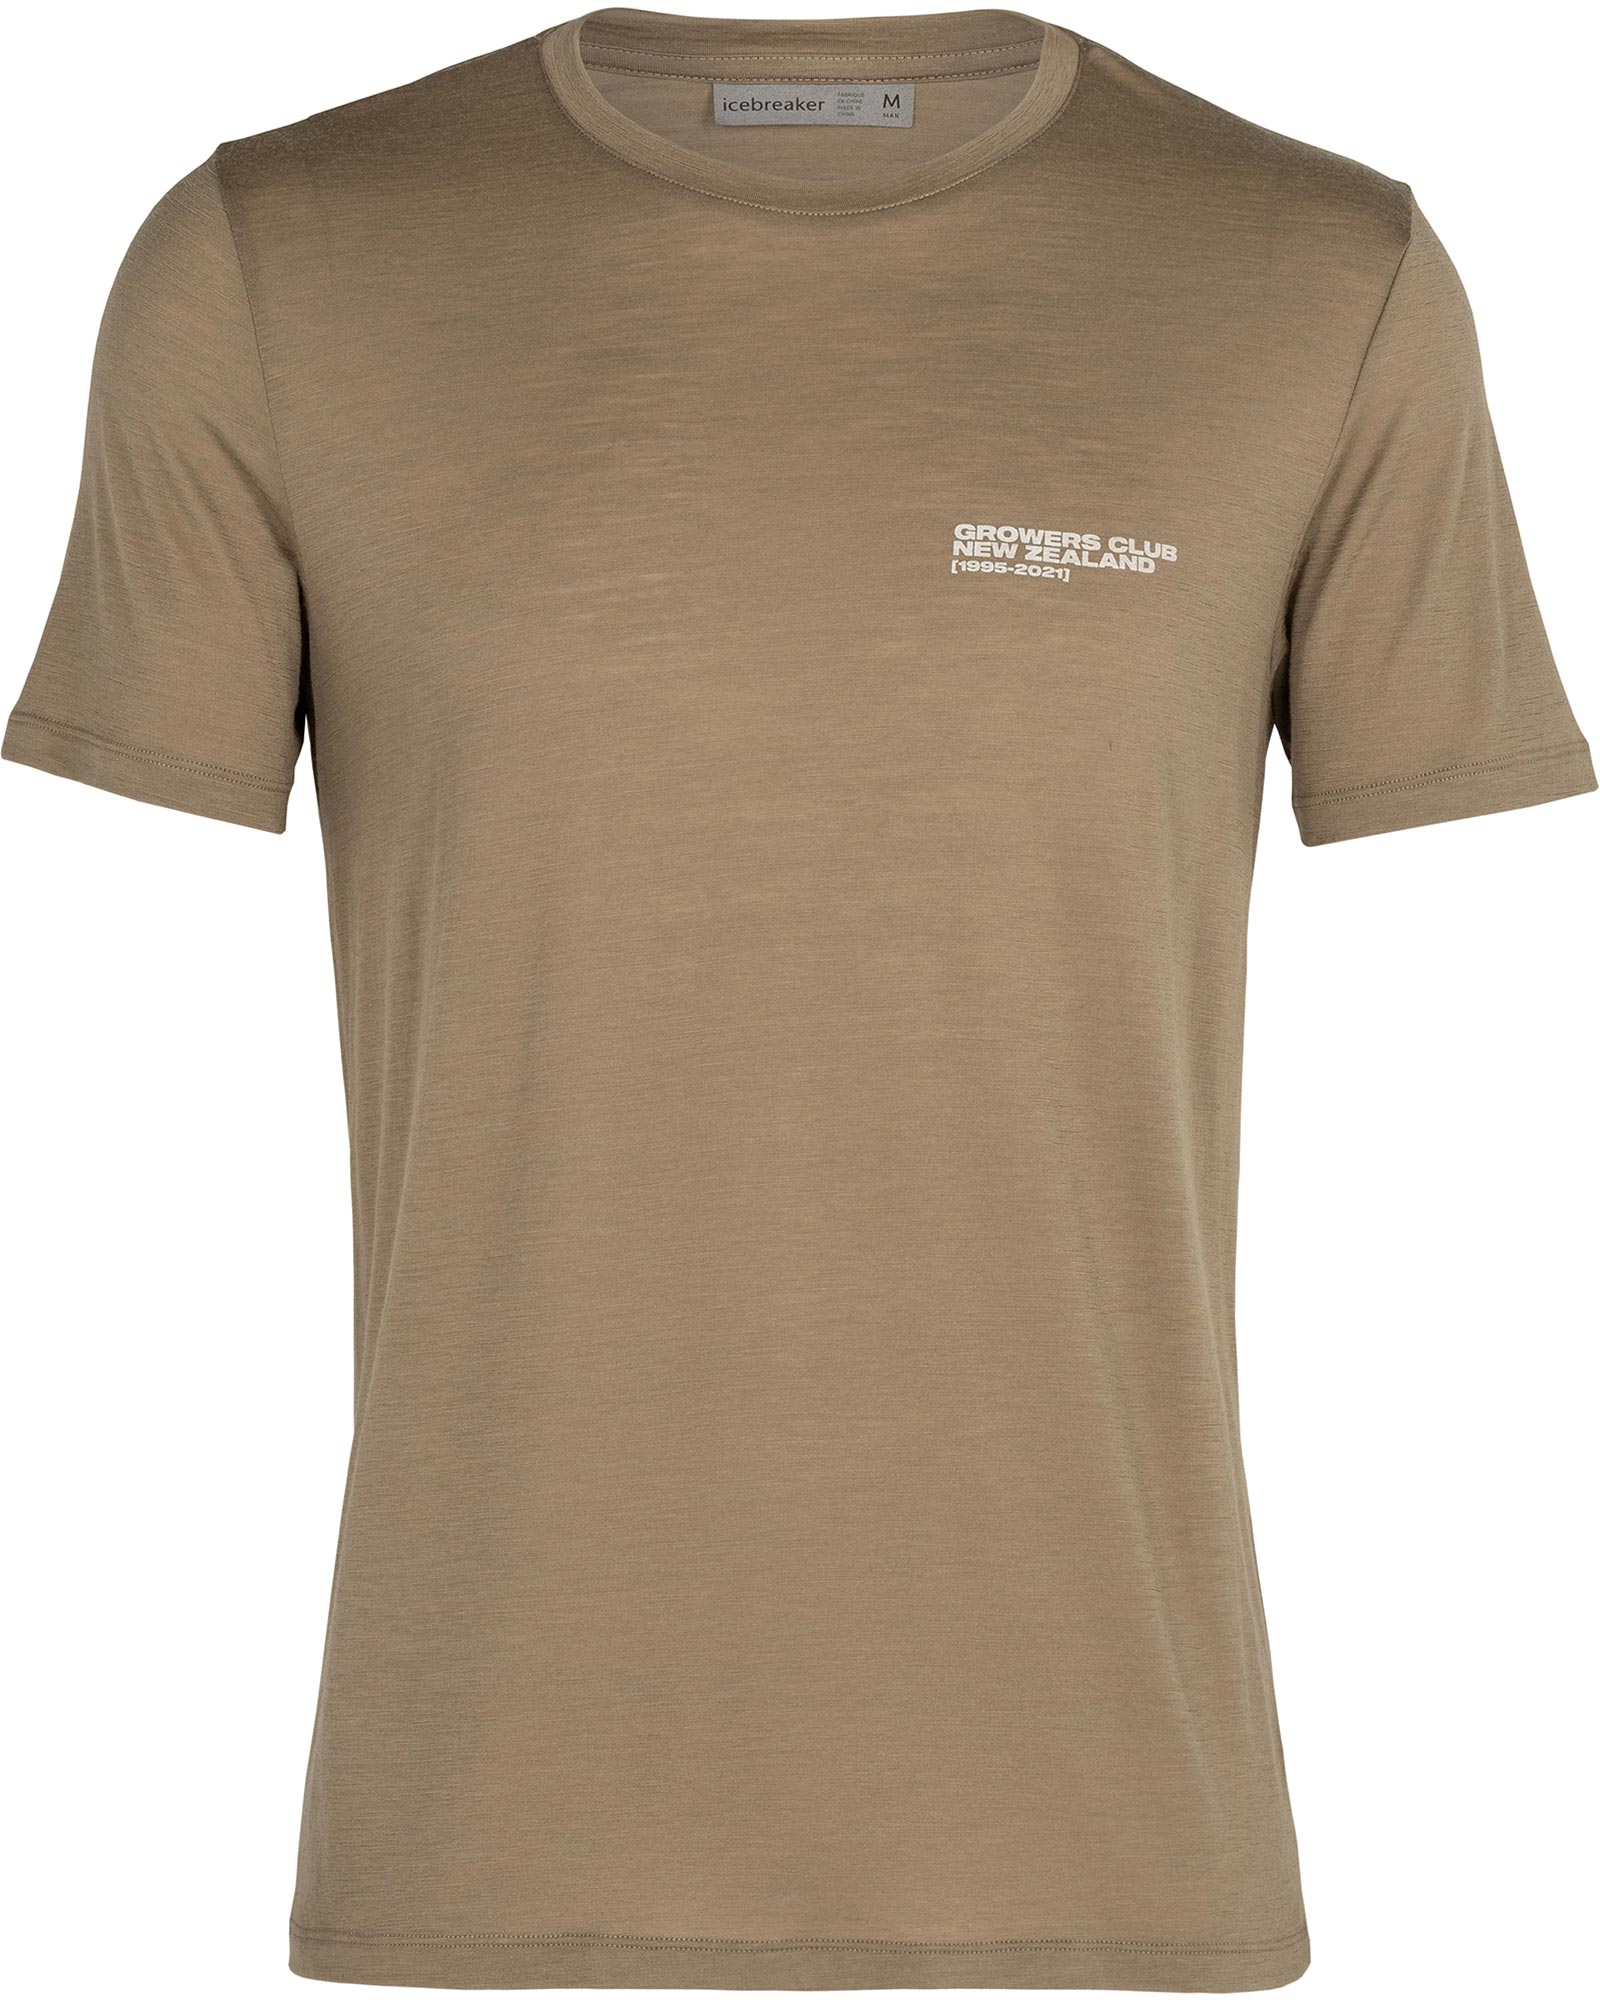 icebreaker Merino Tech Lite Graphic Men’s Crew T Shirt - Growers Club/Flint XL